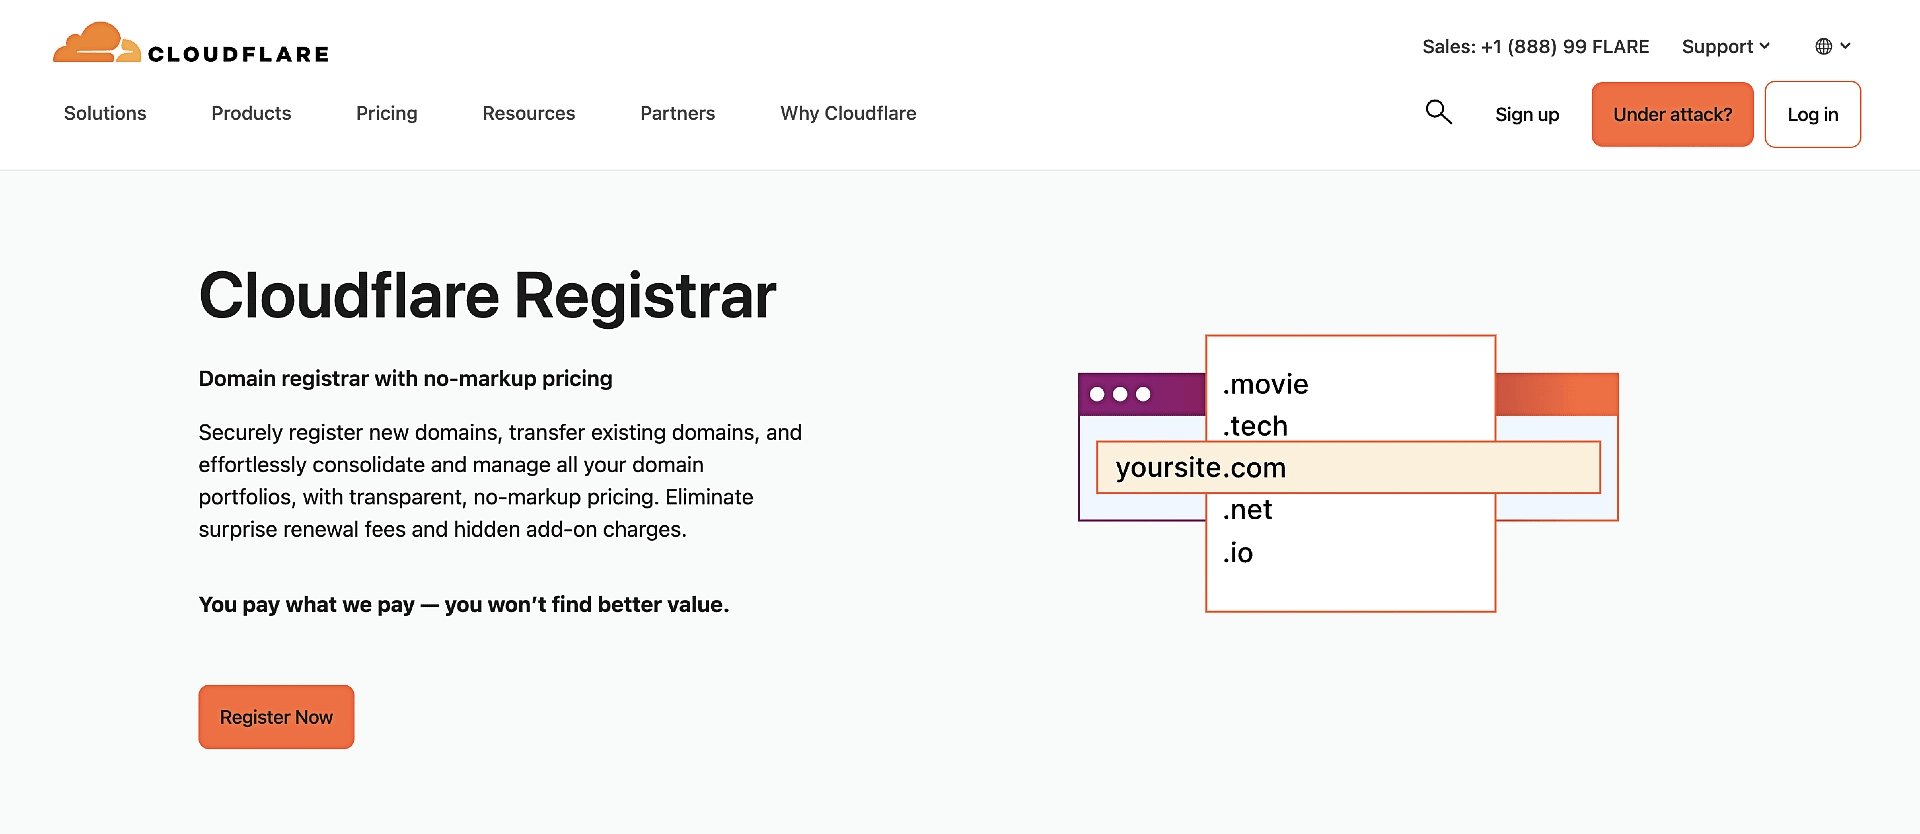 Cloudflare Registrar page.